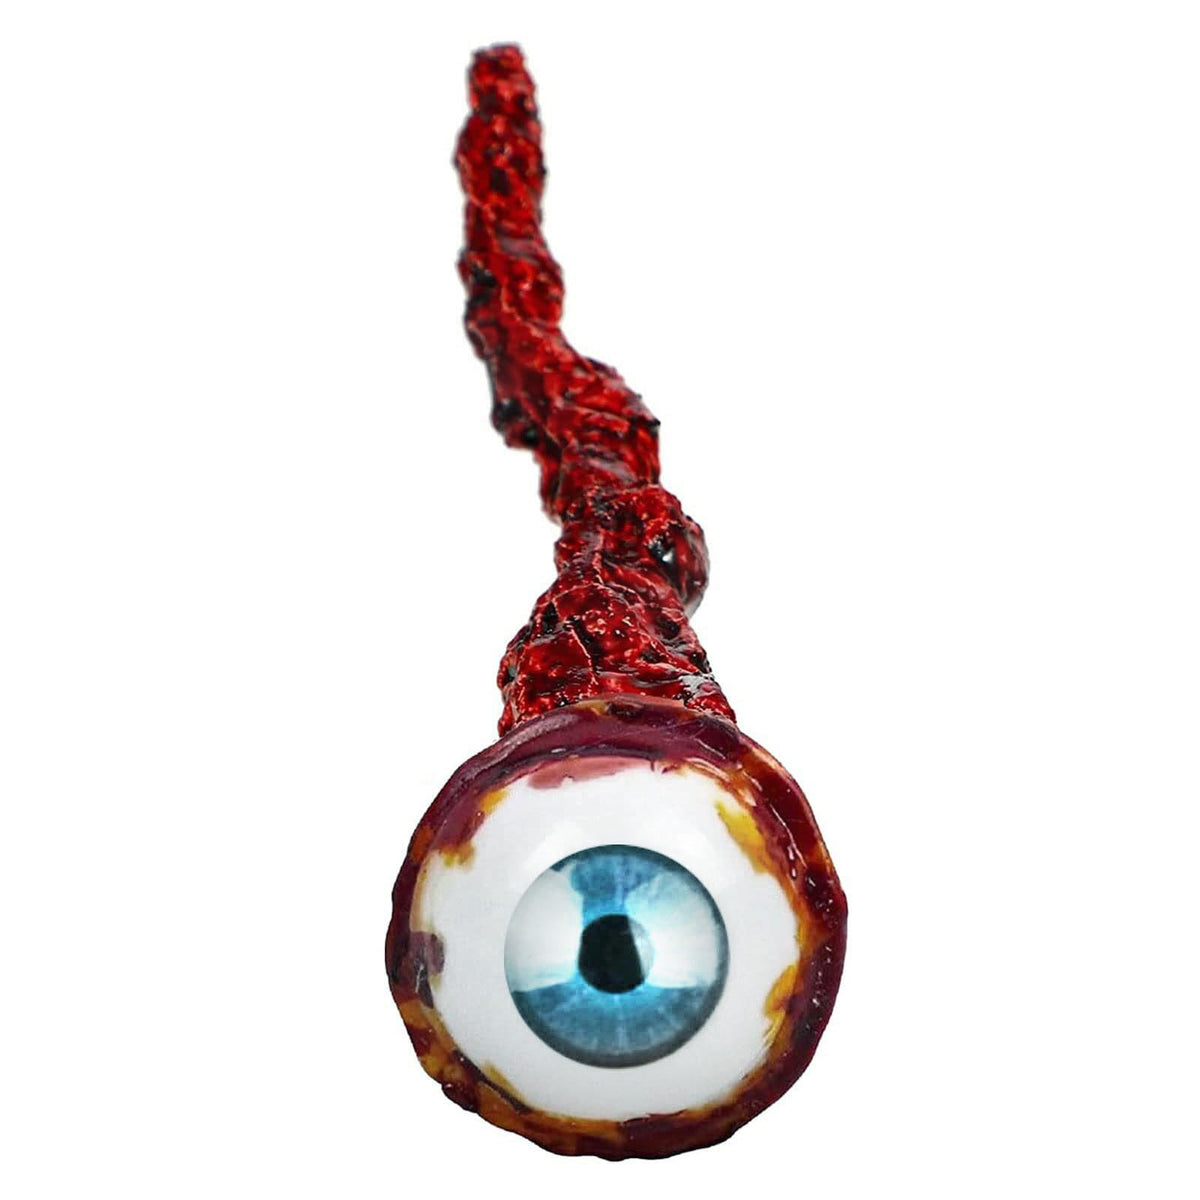  BESTOYARD 20 pcs Horror Eyeball Dragon Eye Simulation